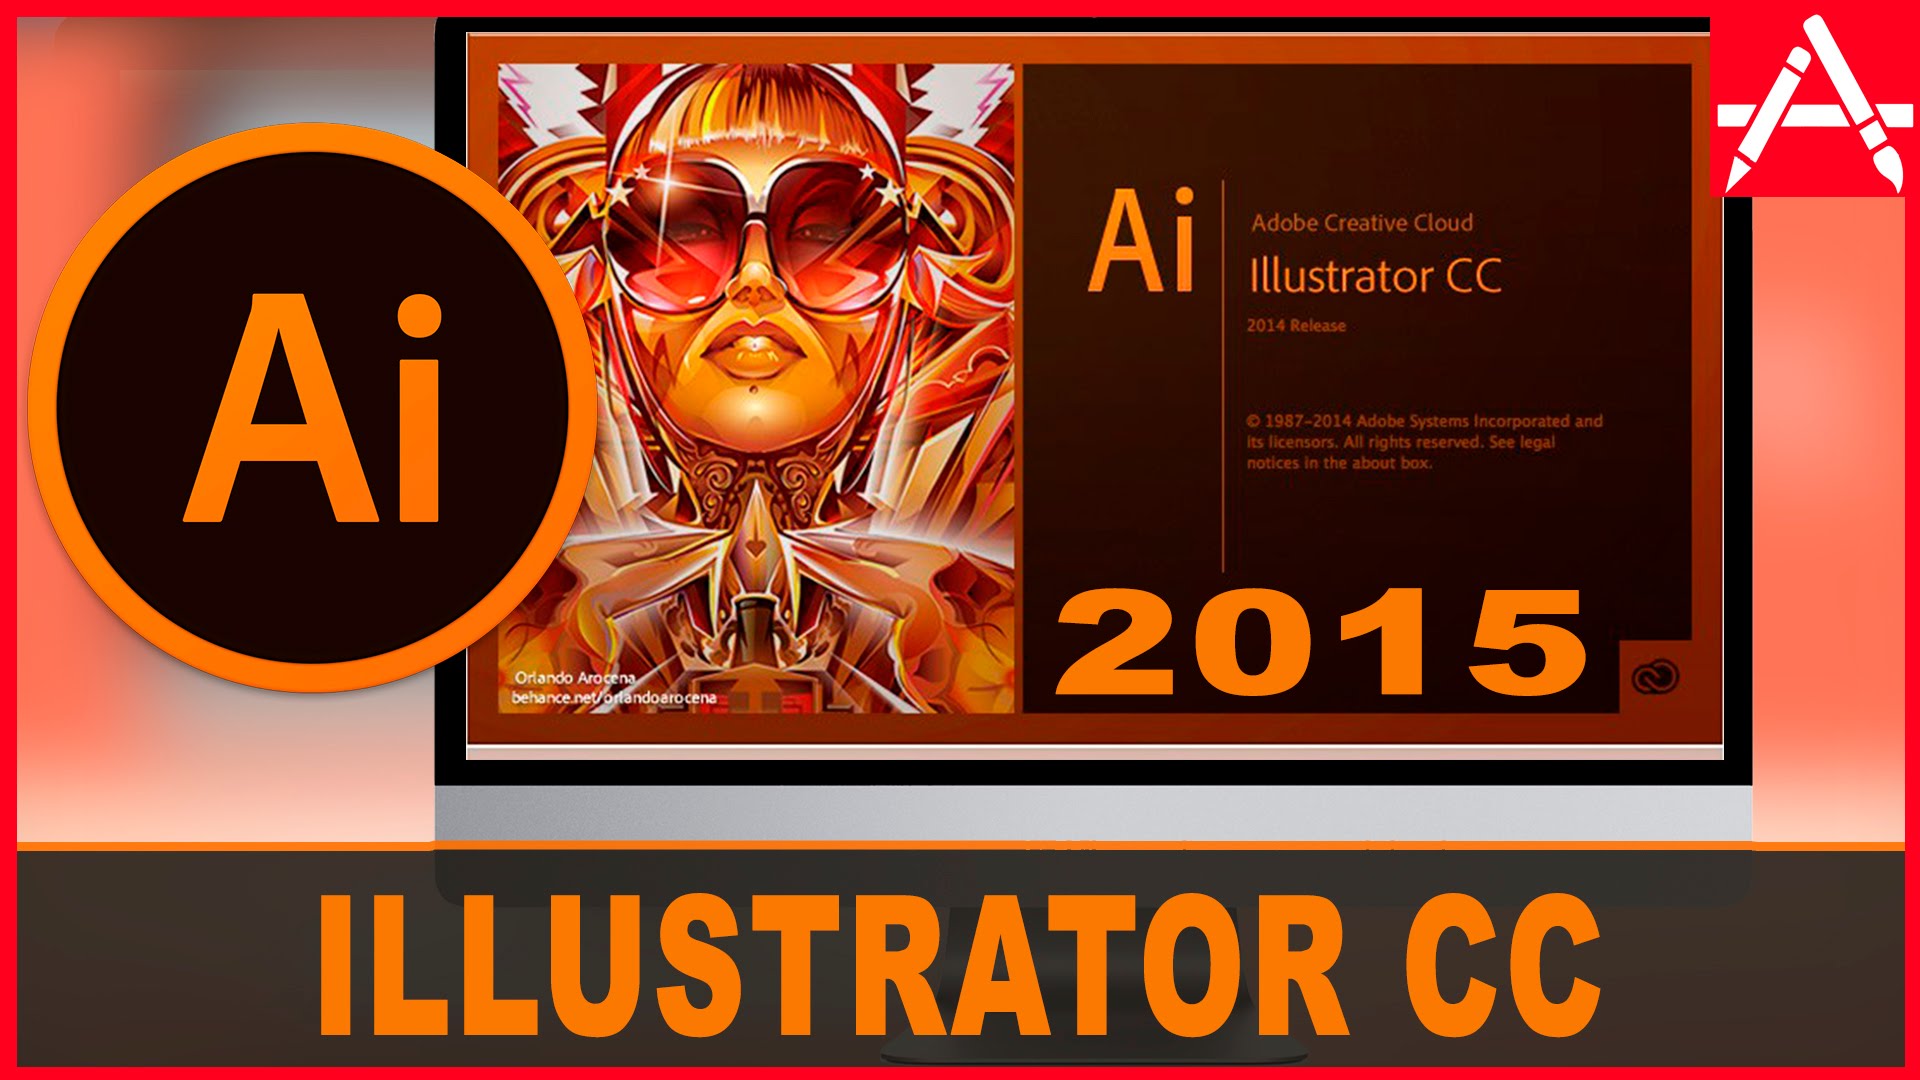 adobe illustrator cc 2015 full crack 64 bit